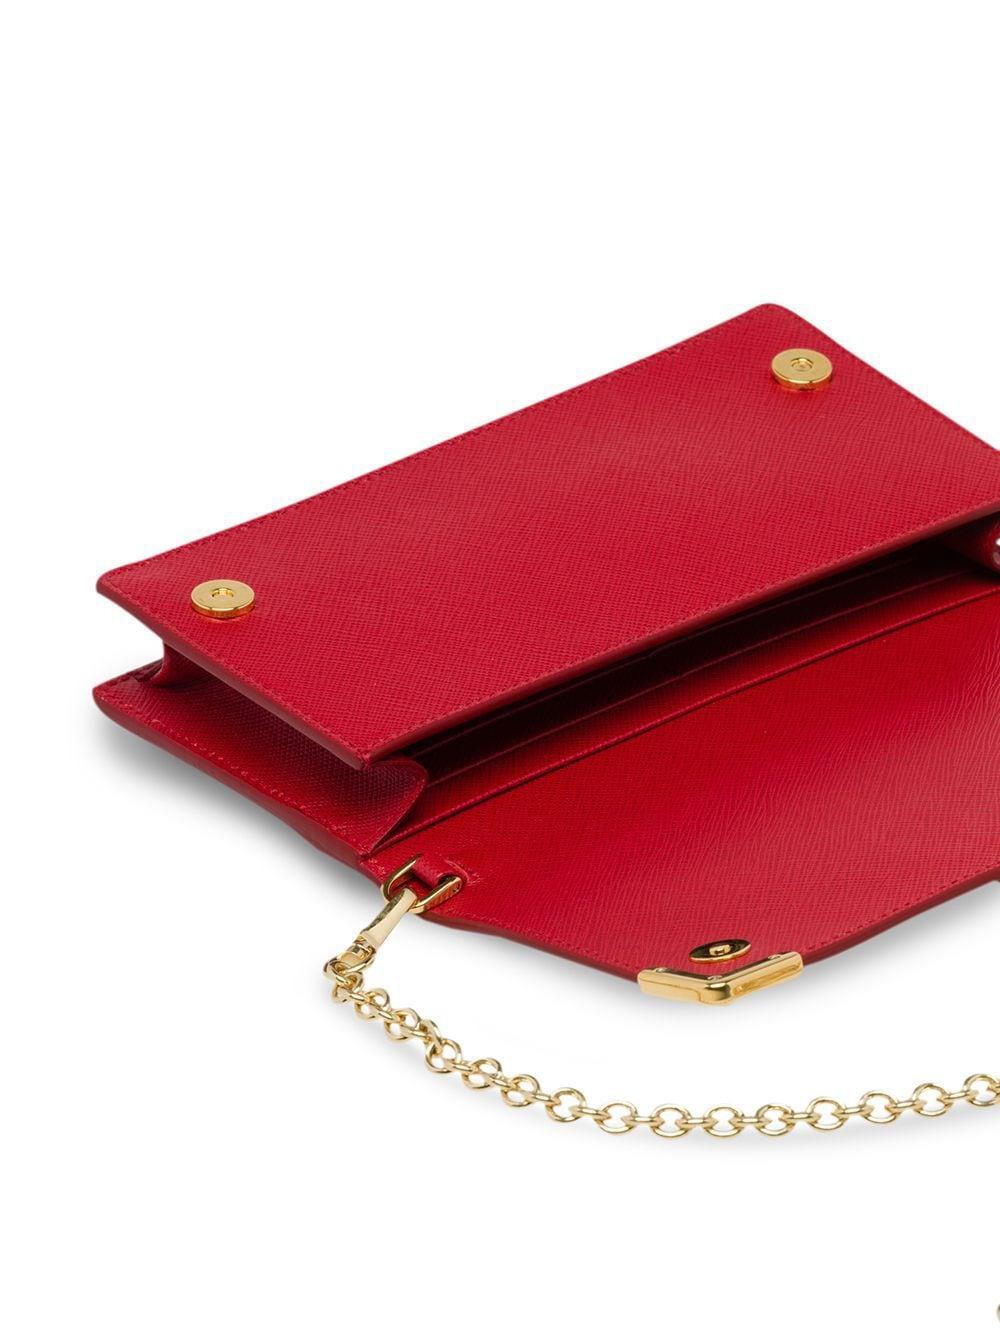 Prada Wallet Chain Purse Red